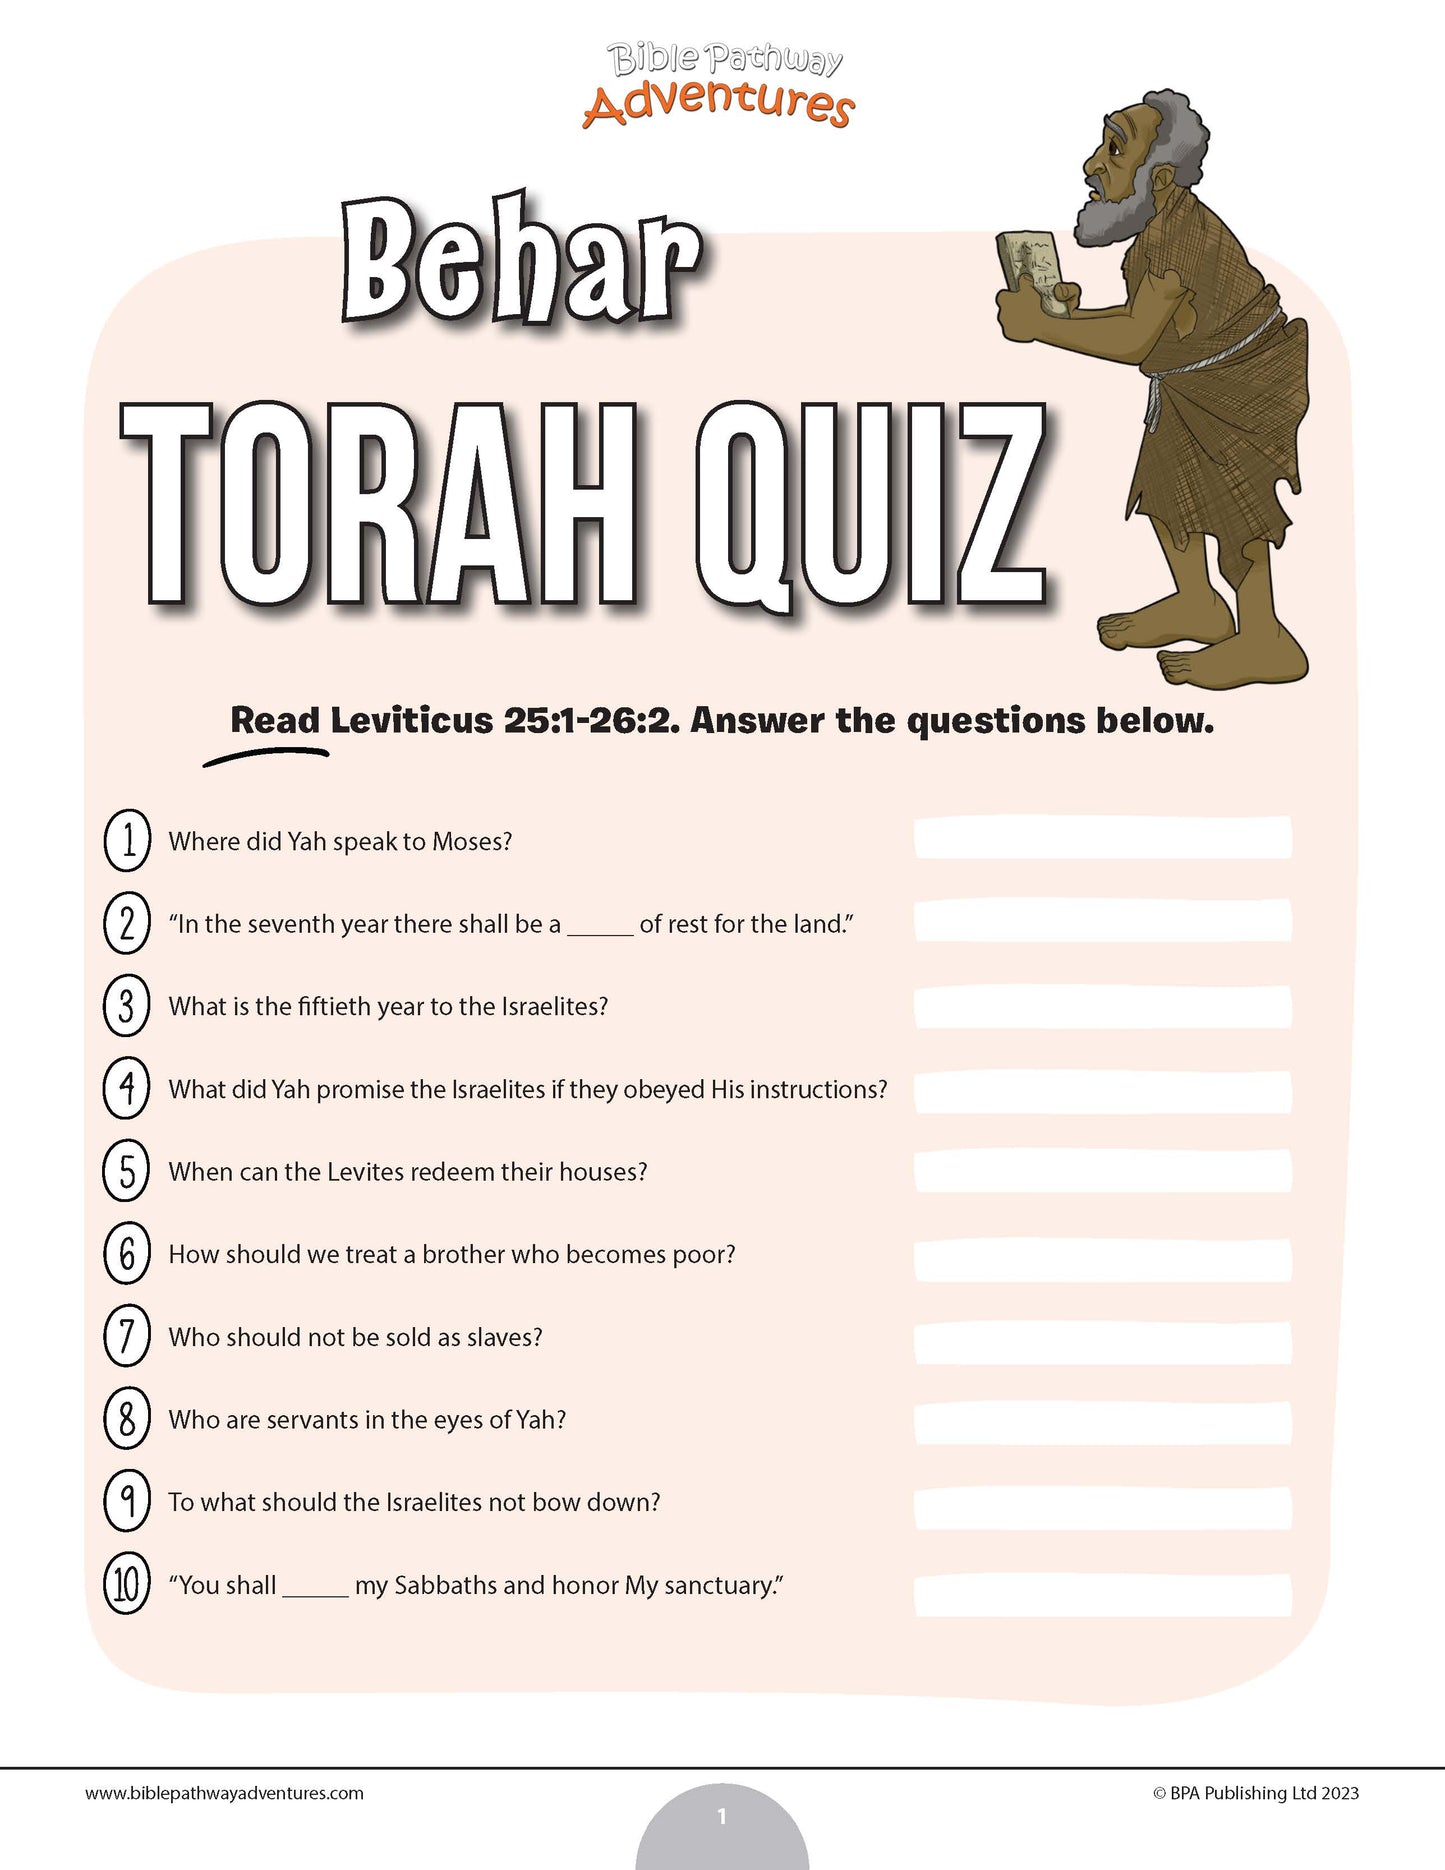 Behar Torah quiz (PDF)